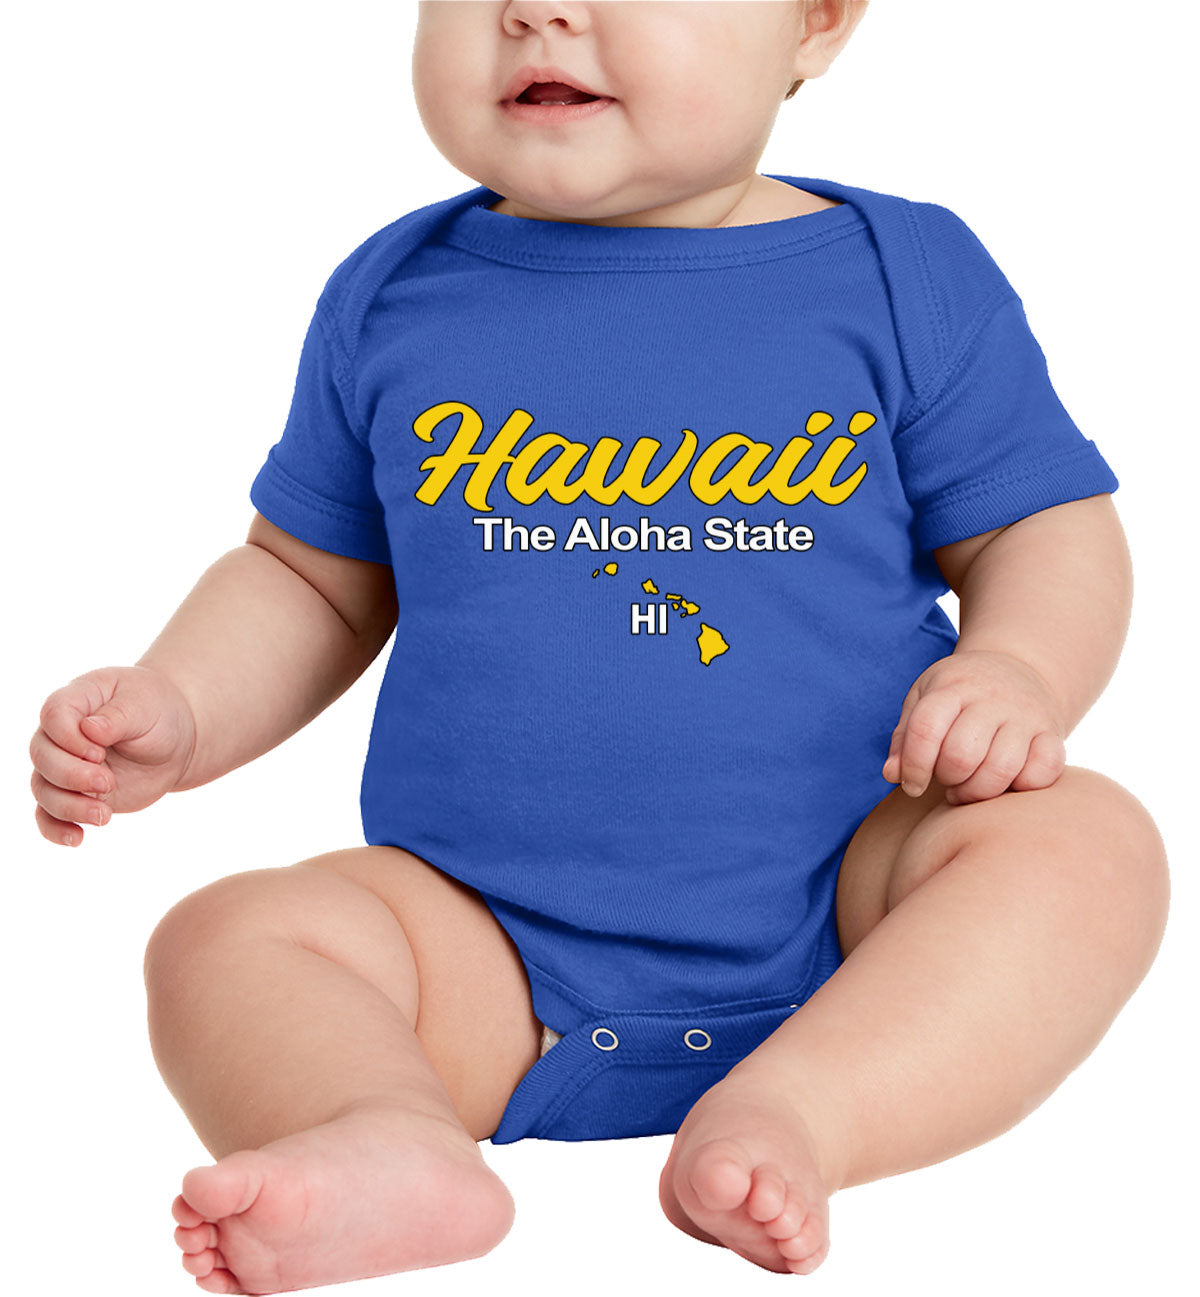 Hawaii The Aloha State Baby Onesie